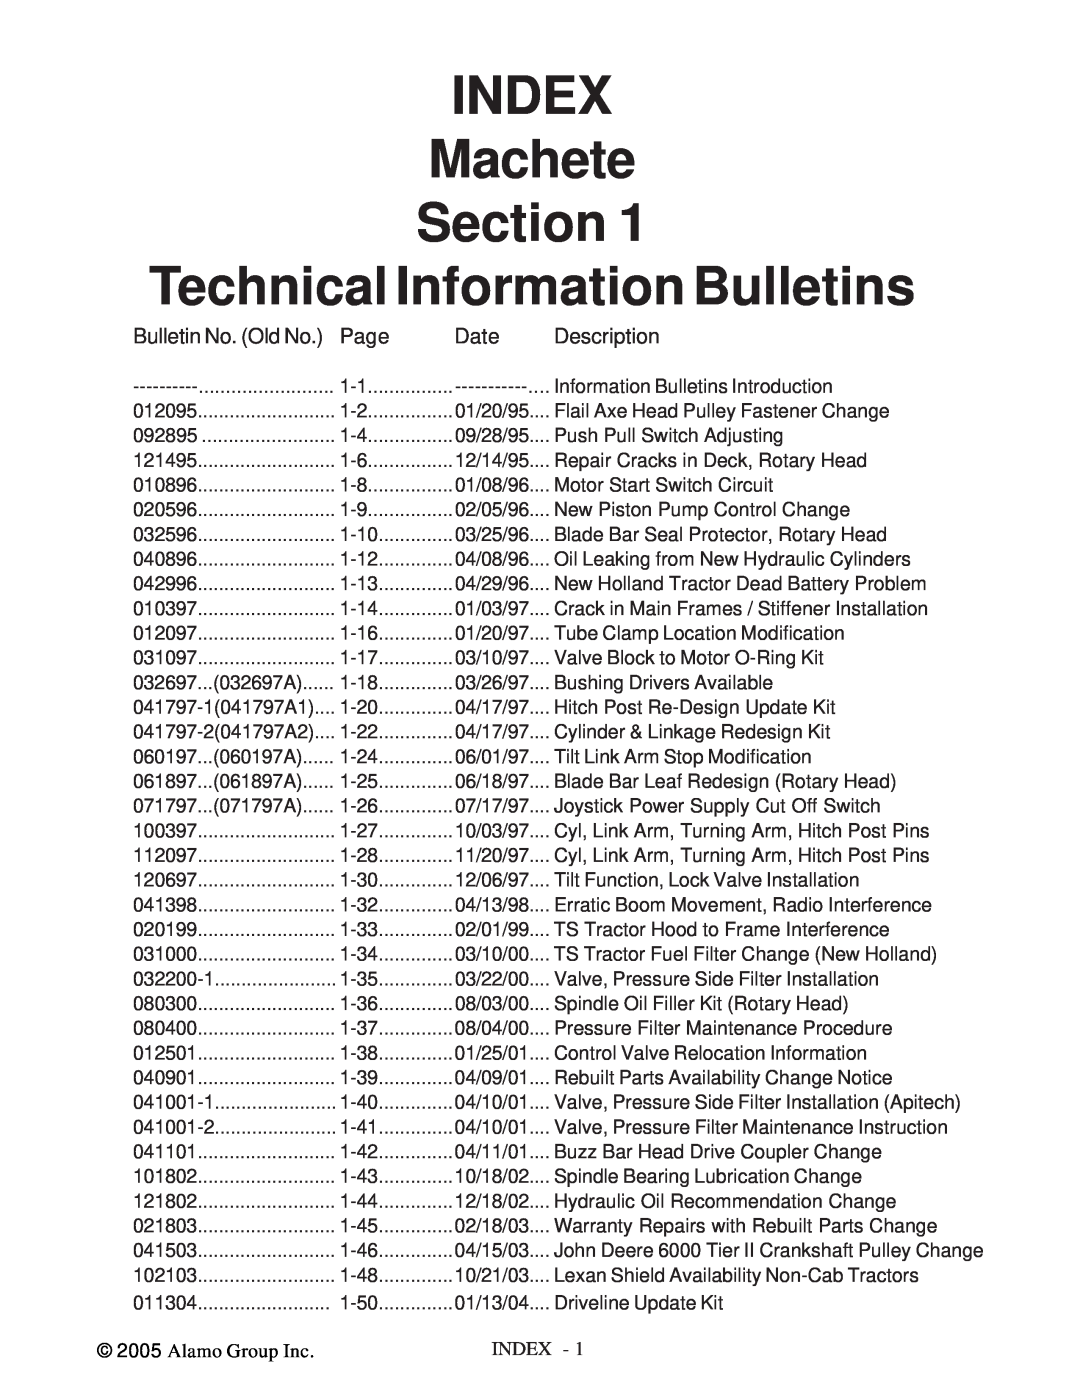 Alamo T 7740 INDEX Machete Section, Technical Information Bulletins, Bulletin No. Old No, Page, Date, Description, Index 